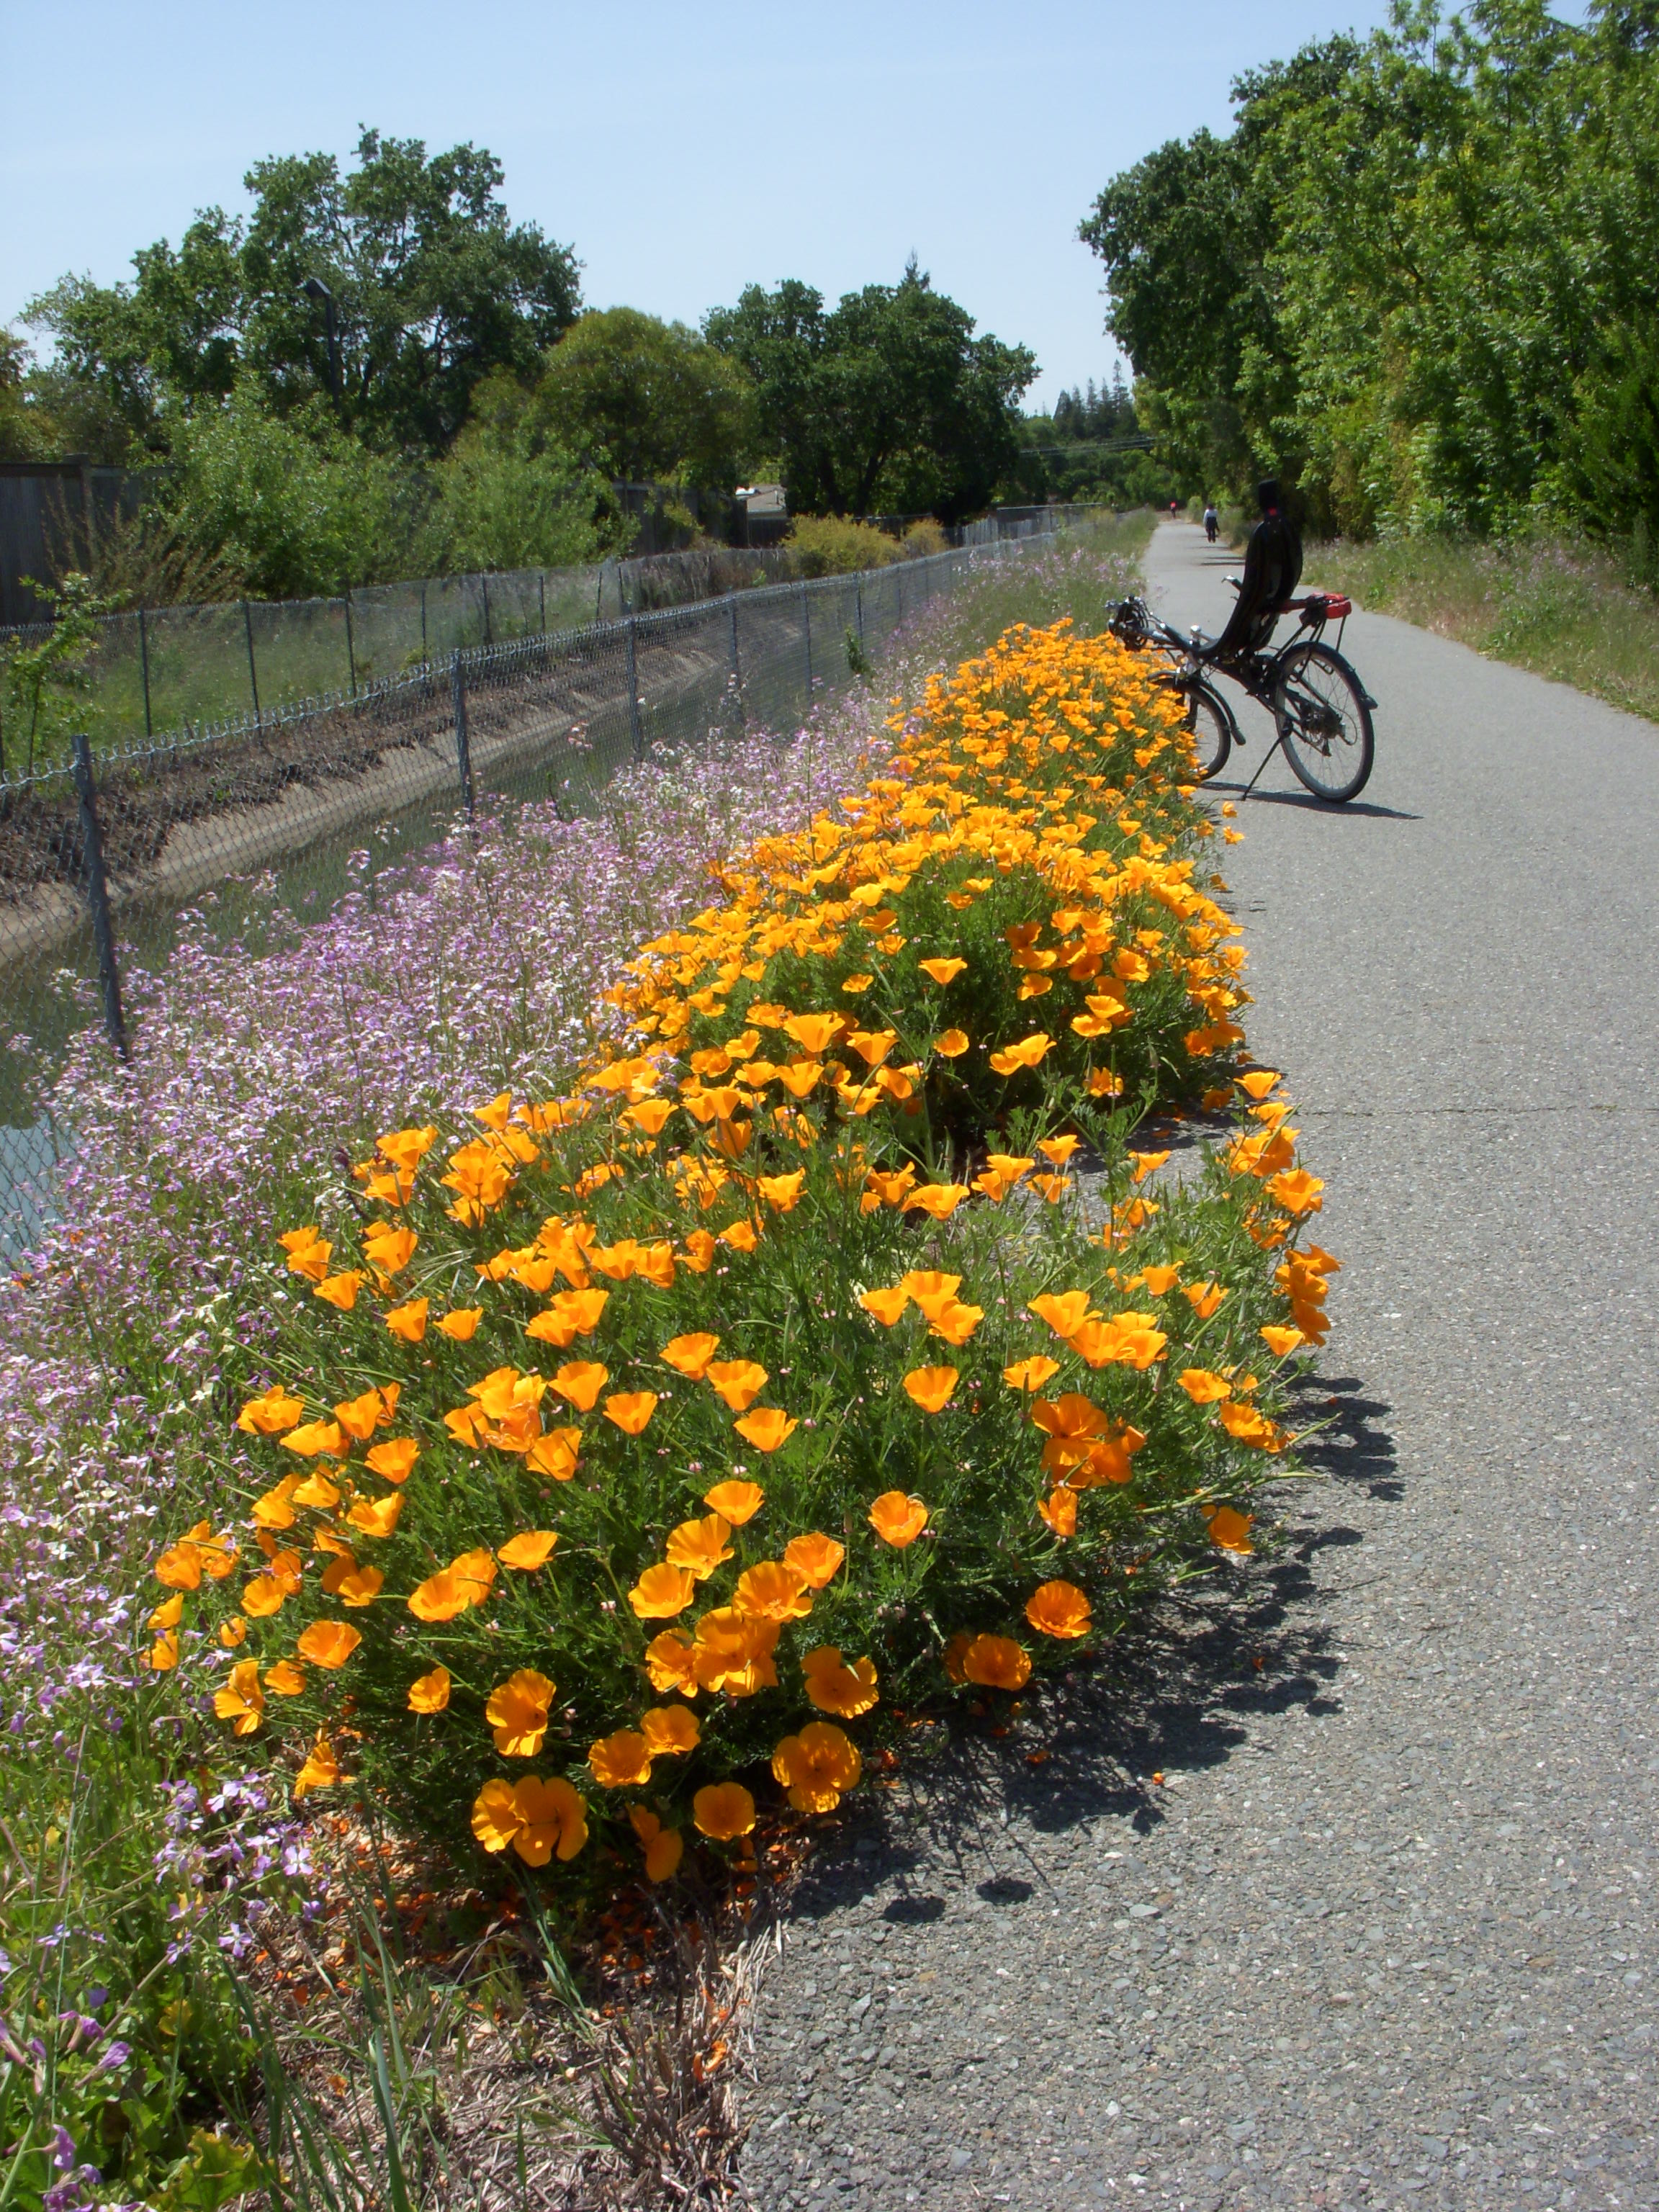  bike path wildflowers